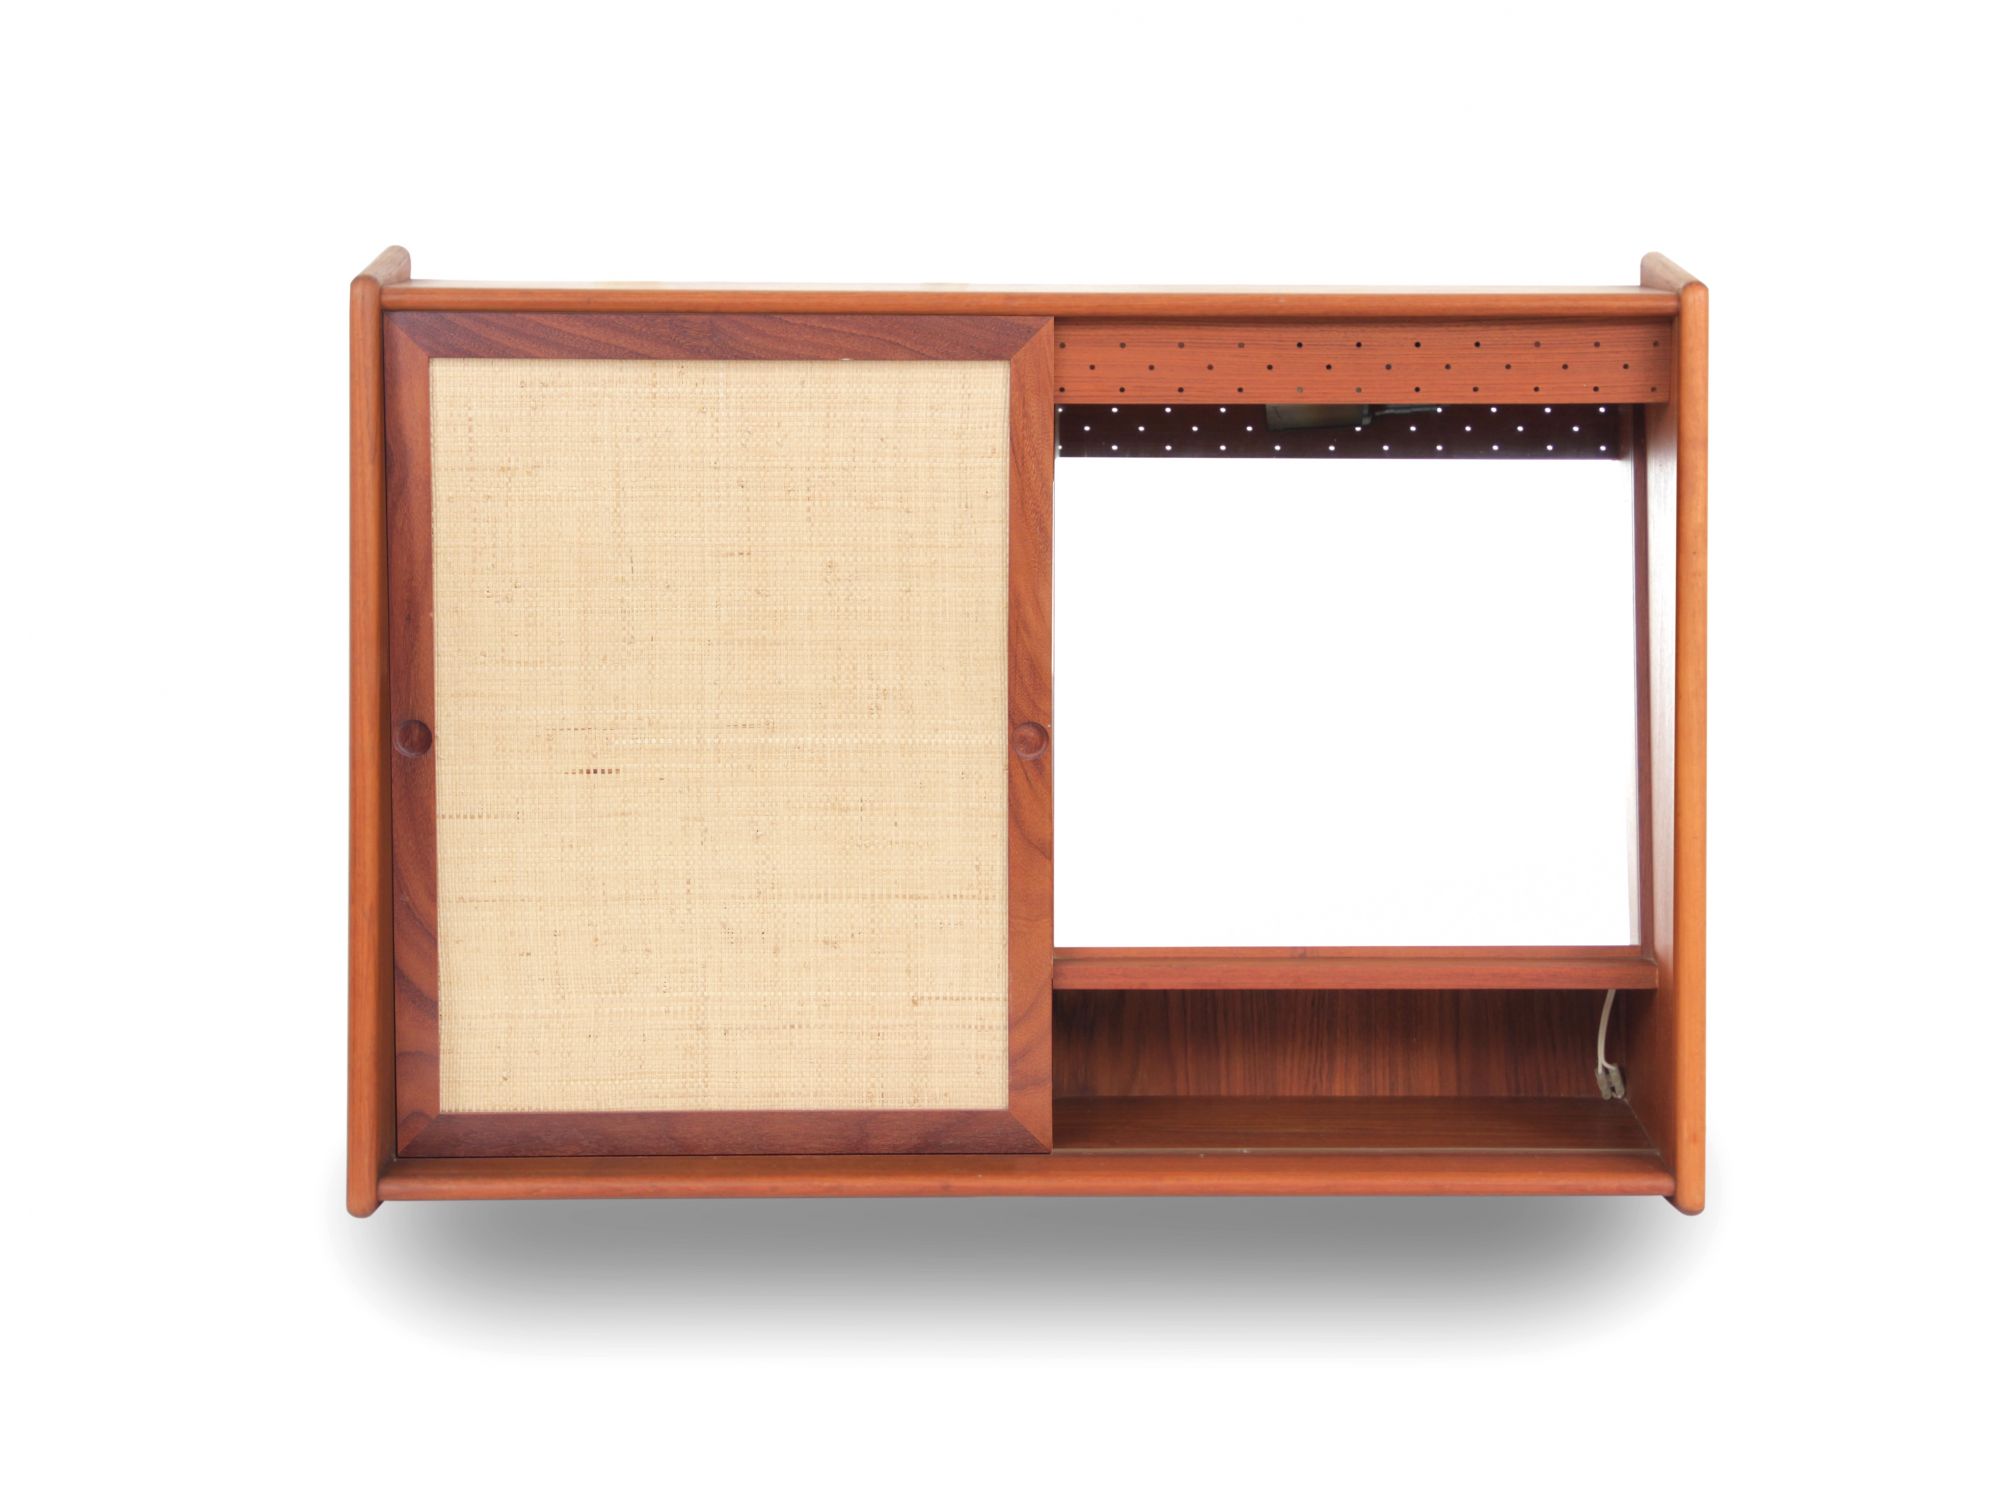 https://artorigo.com/ao_products/30215/l/furniture-cabinets-1960-1969-scandinavian-galerie-m%C3%B8bler--191583.jpg